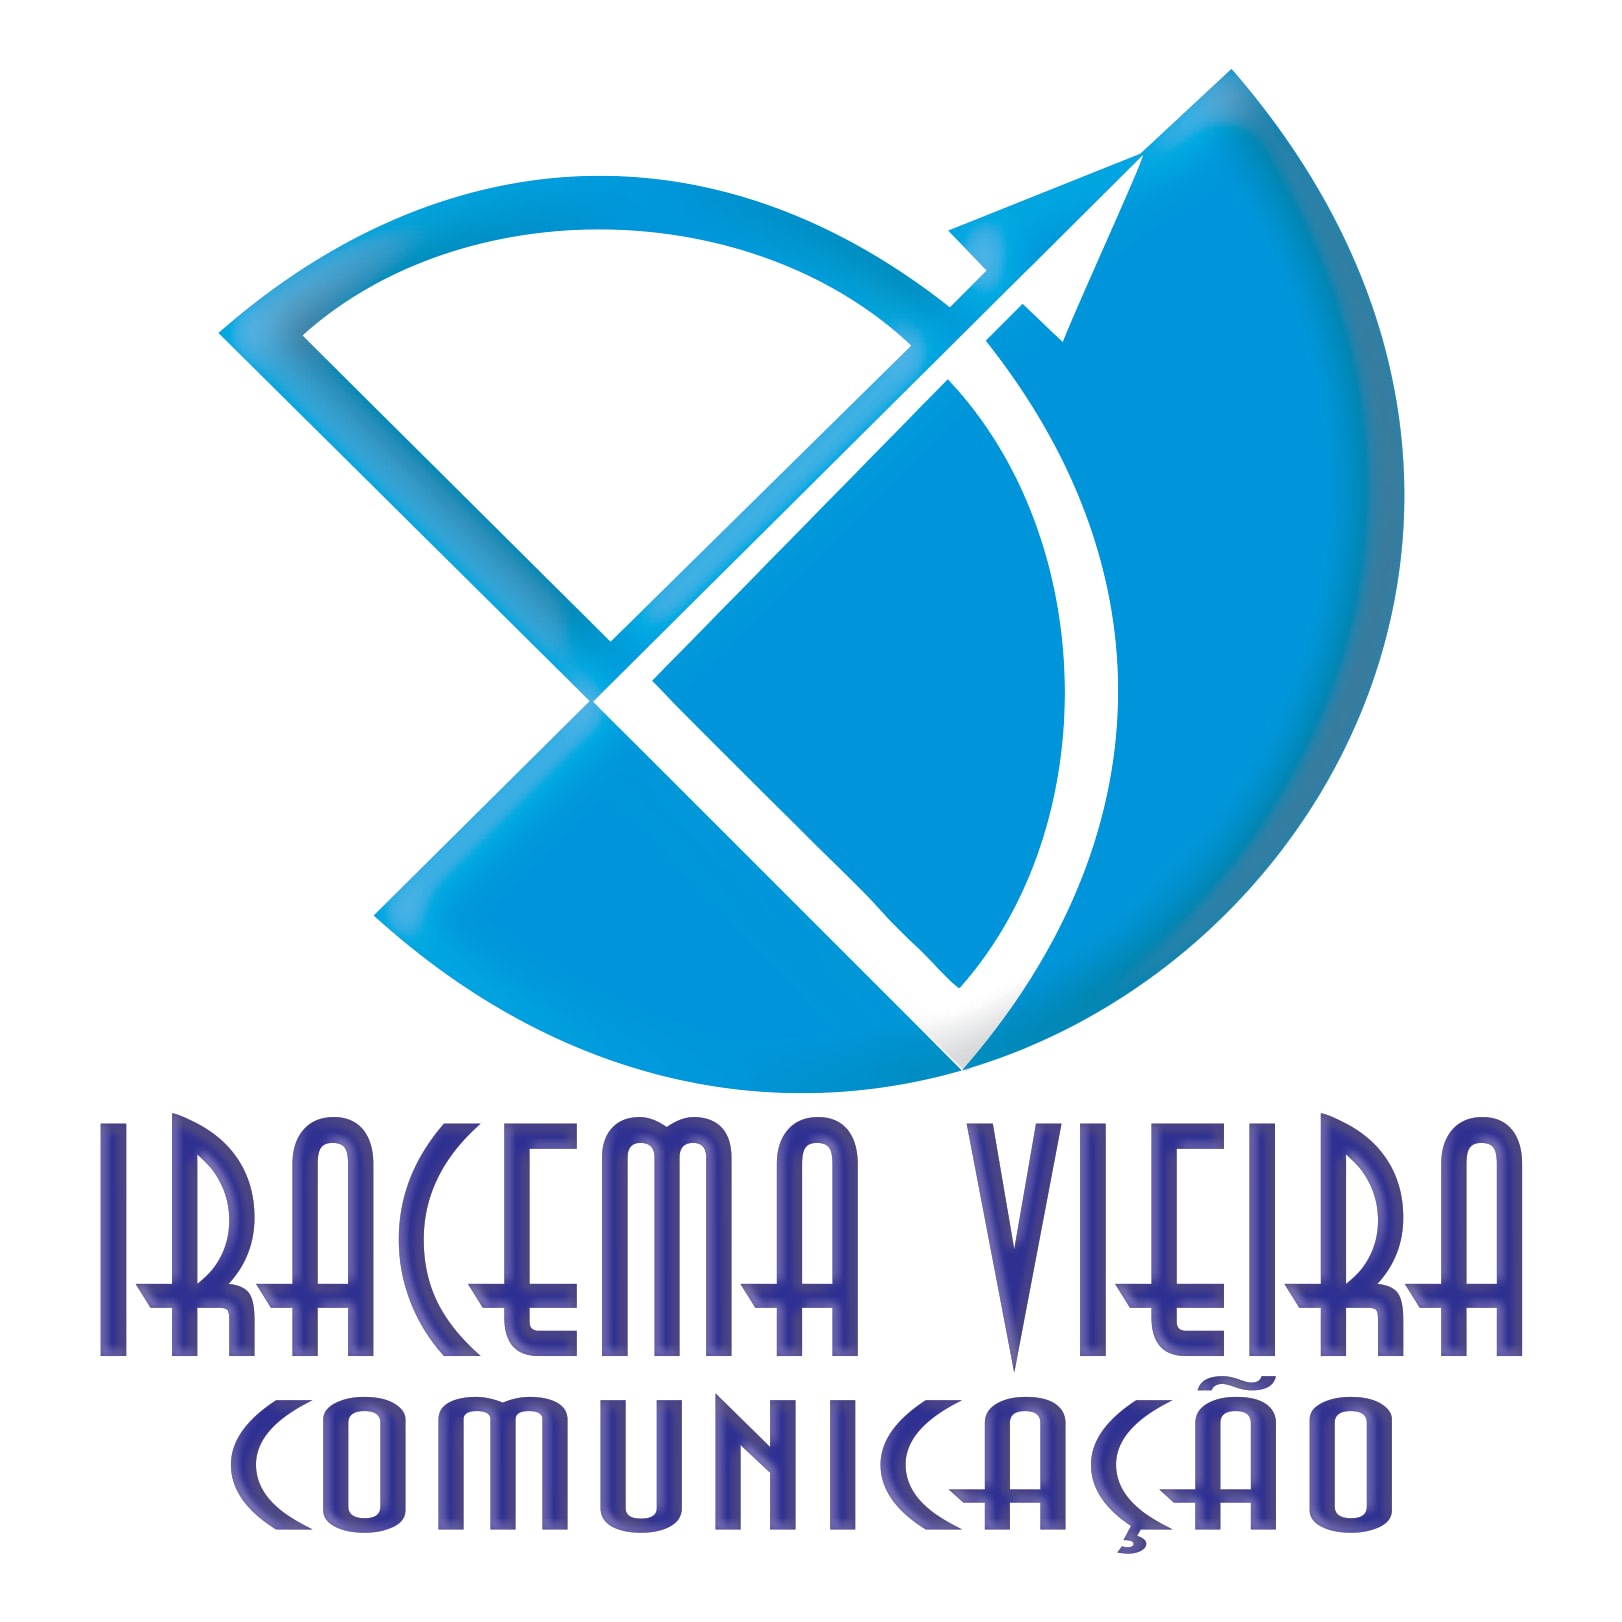 Iracema Vieira